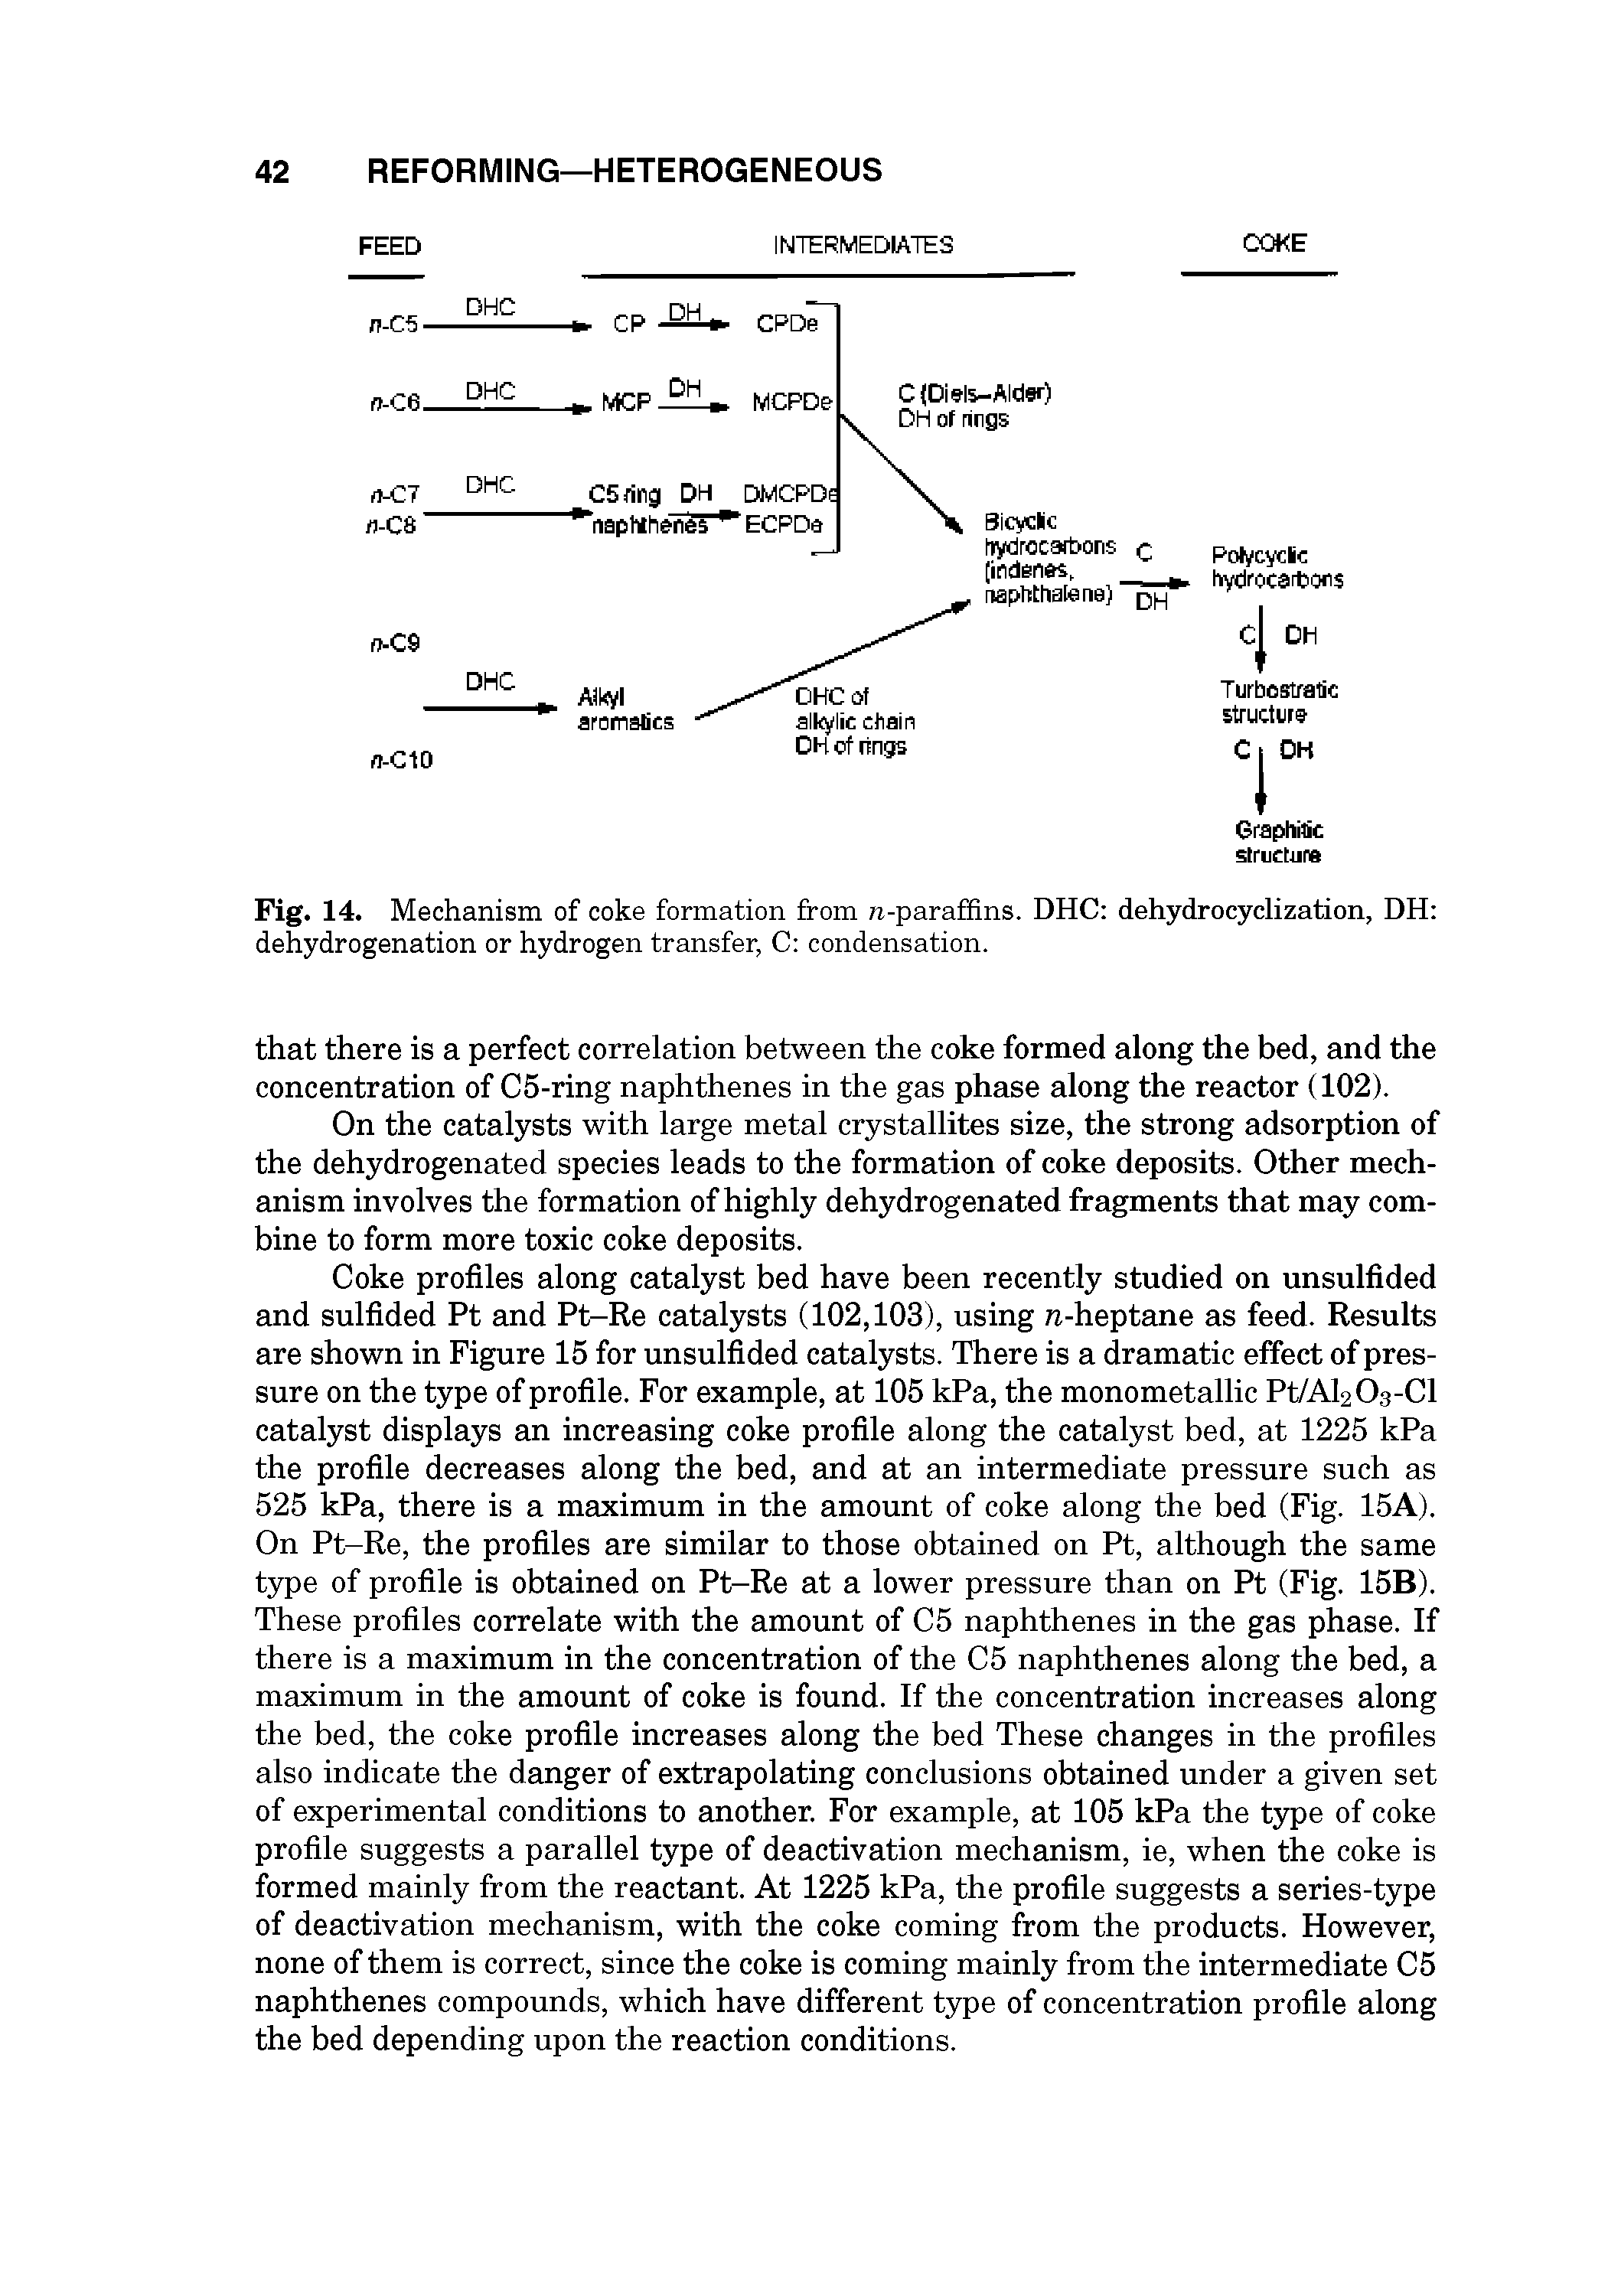 Fig. 14. Mechanism of coke formation from n.-paraffins. DHC dehydrocyclization, DH dehydrogenation or hydrogen transfer, C condensation.